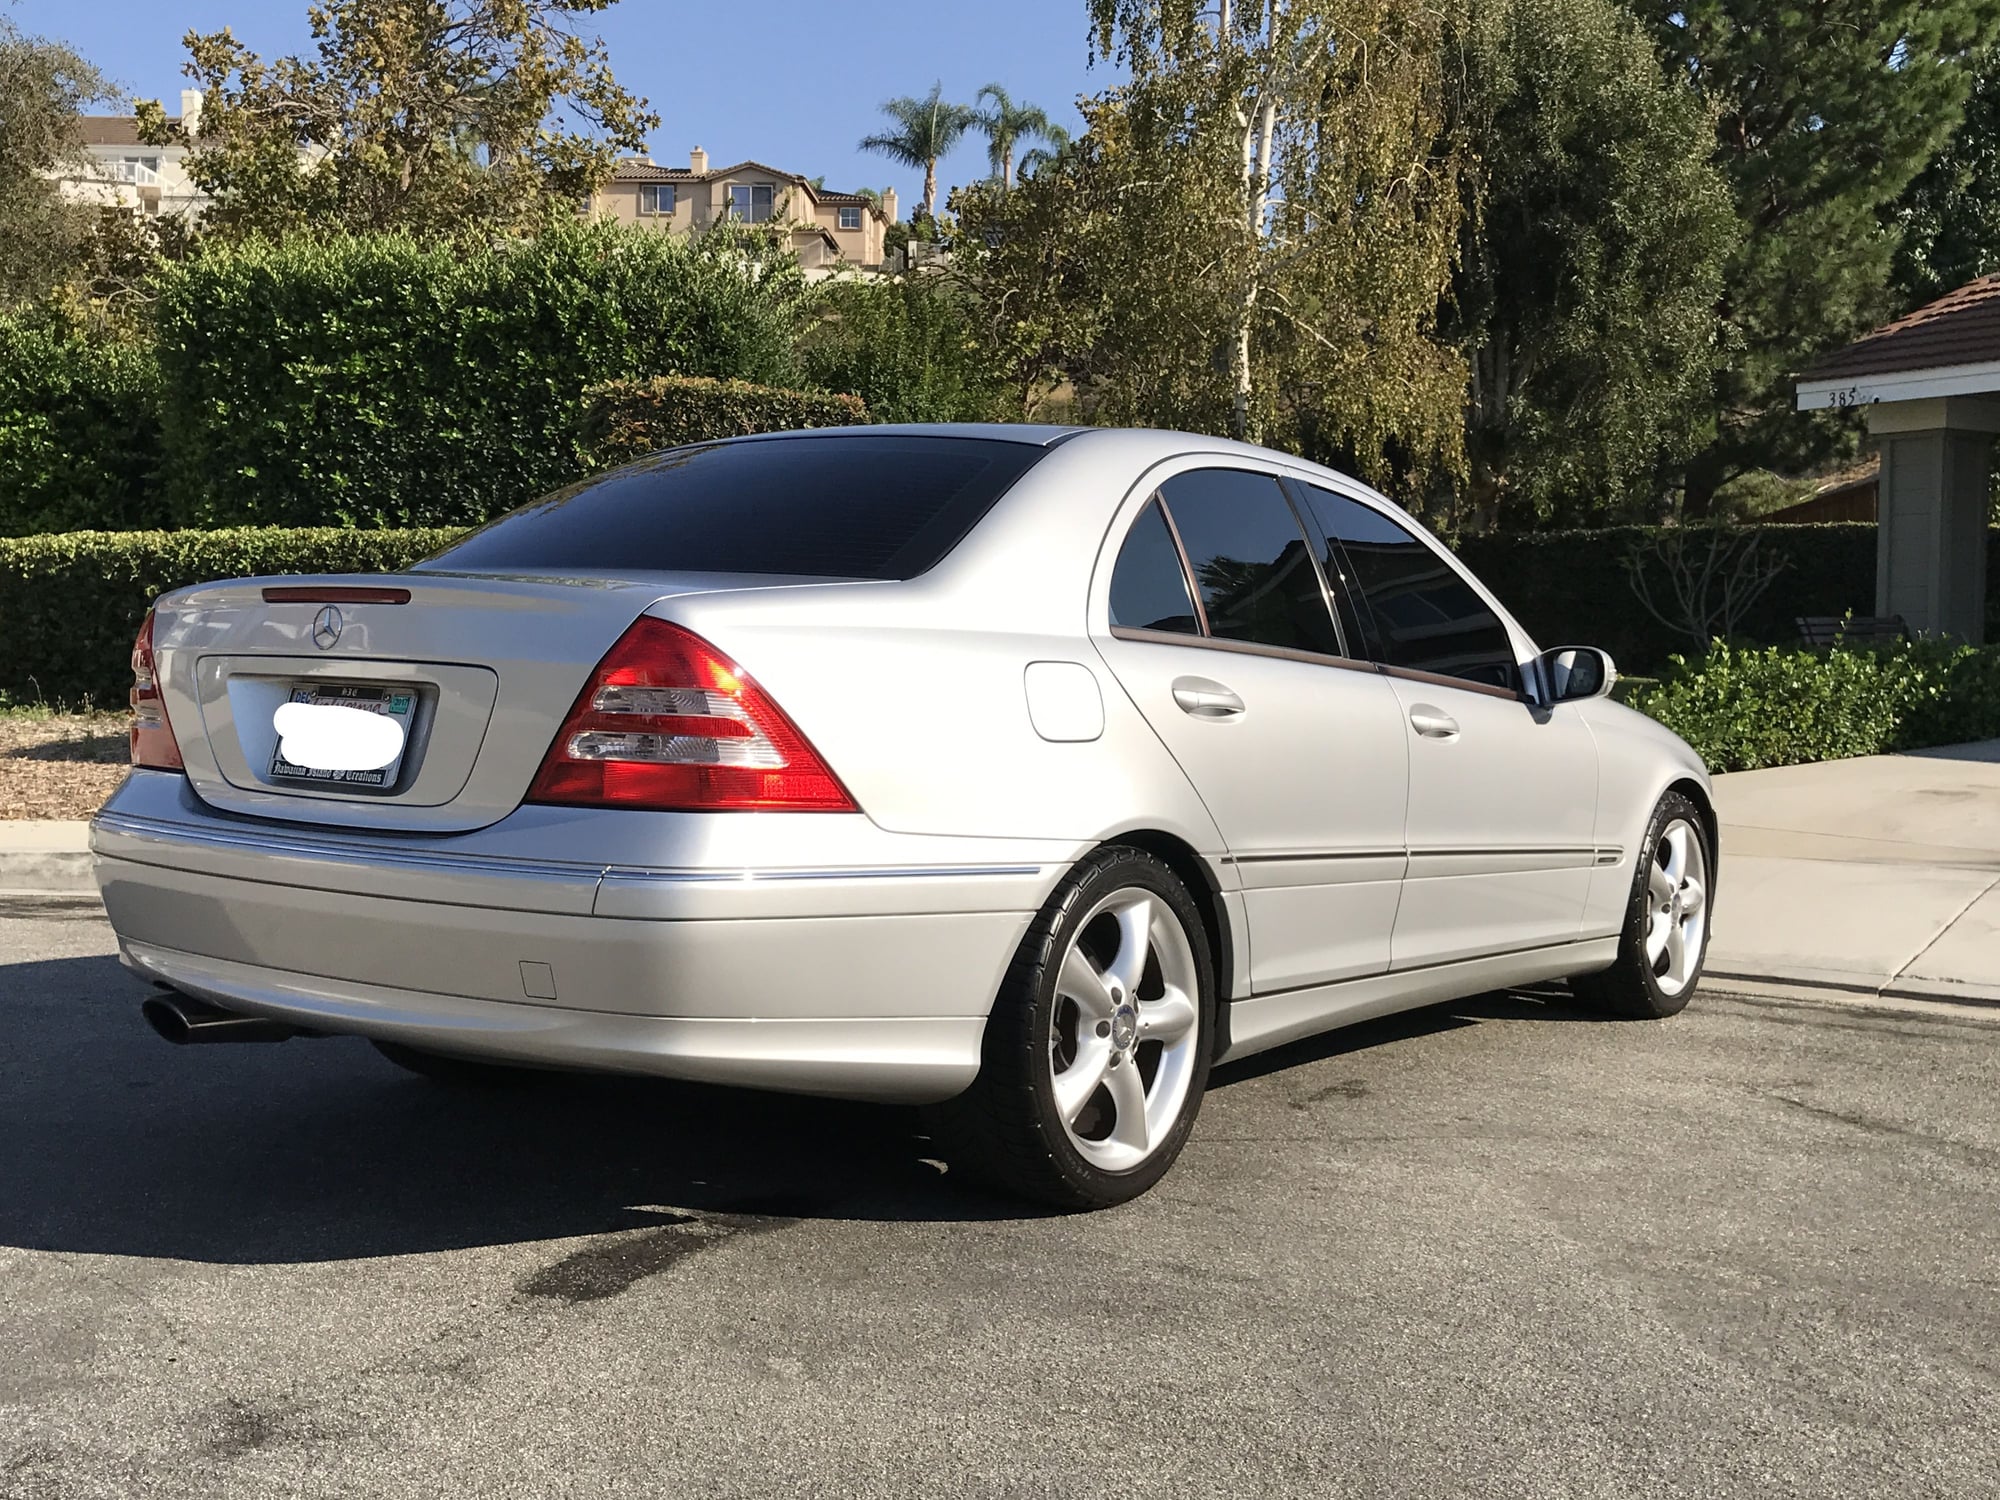 2004 Mercedes-Benz C230 - 2004.5 C230 Rare 6MT - Used - VIN WDBRF40J84F506523 - 163,200 Miles - 4 cyl - 2WD - Manual - Sedan - Silver - Anaheim Hills, CA 92808, United States